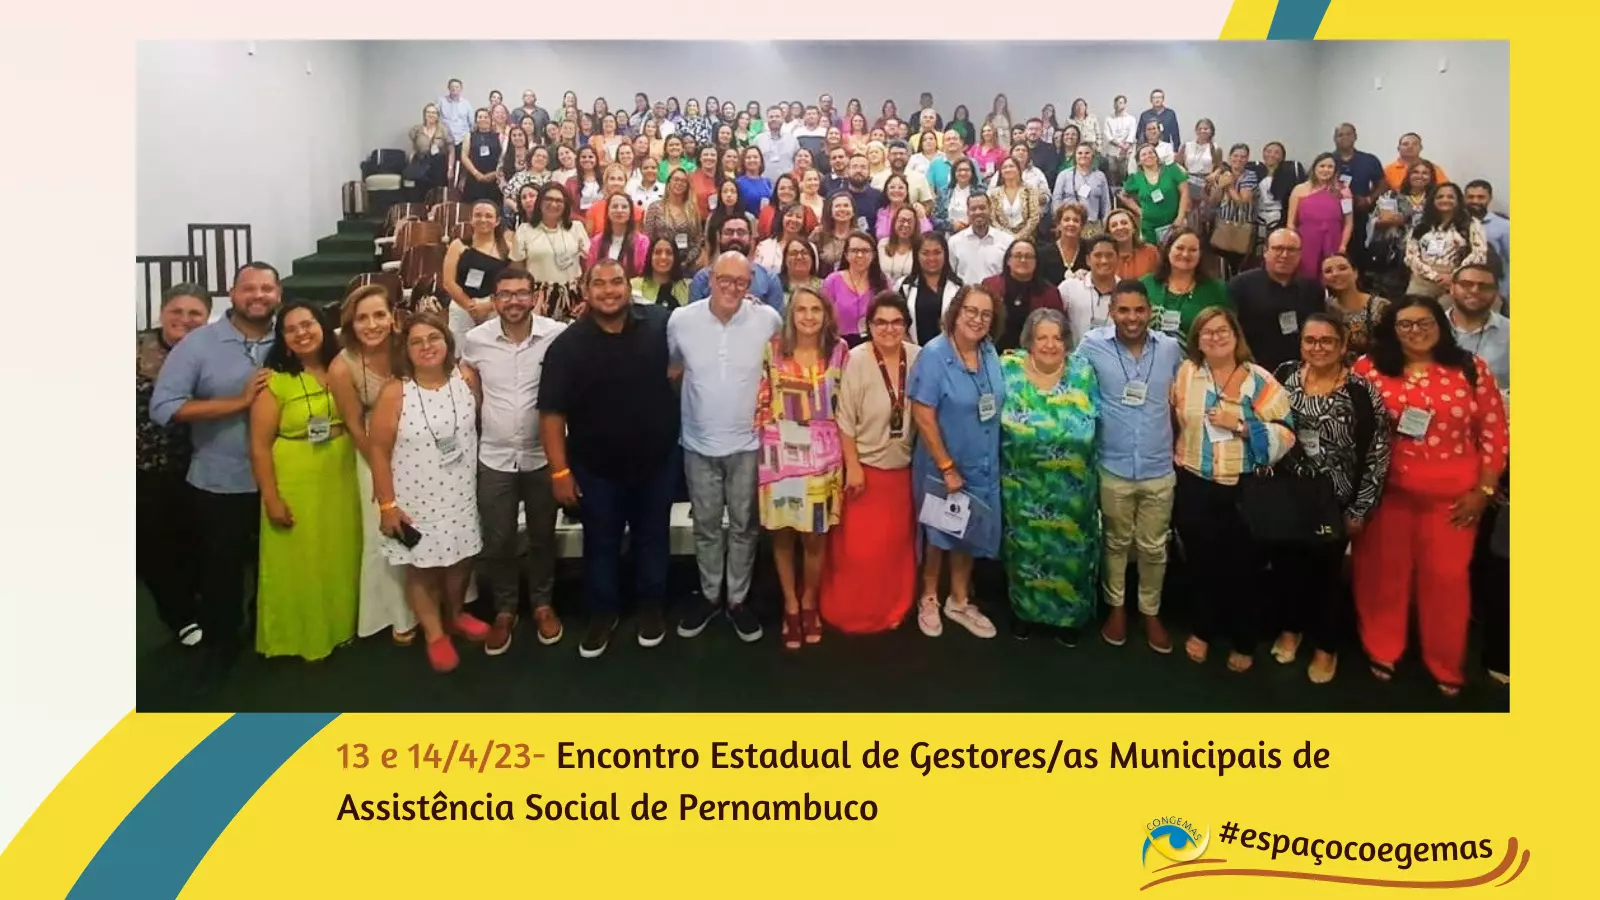 COEGEMAS PE / Encontro Estadual de Gestores Municipais de Assistência Social de Pernambuco